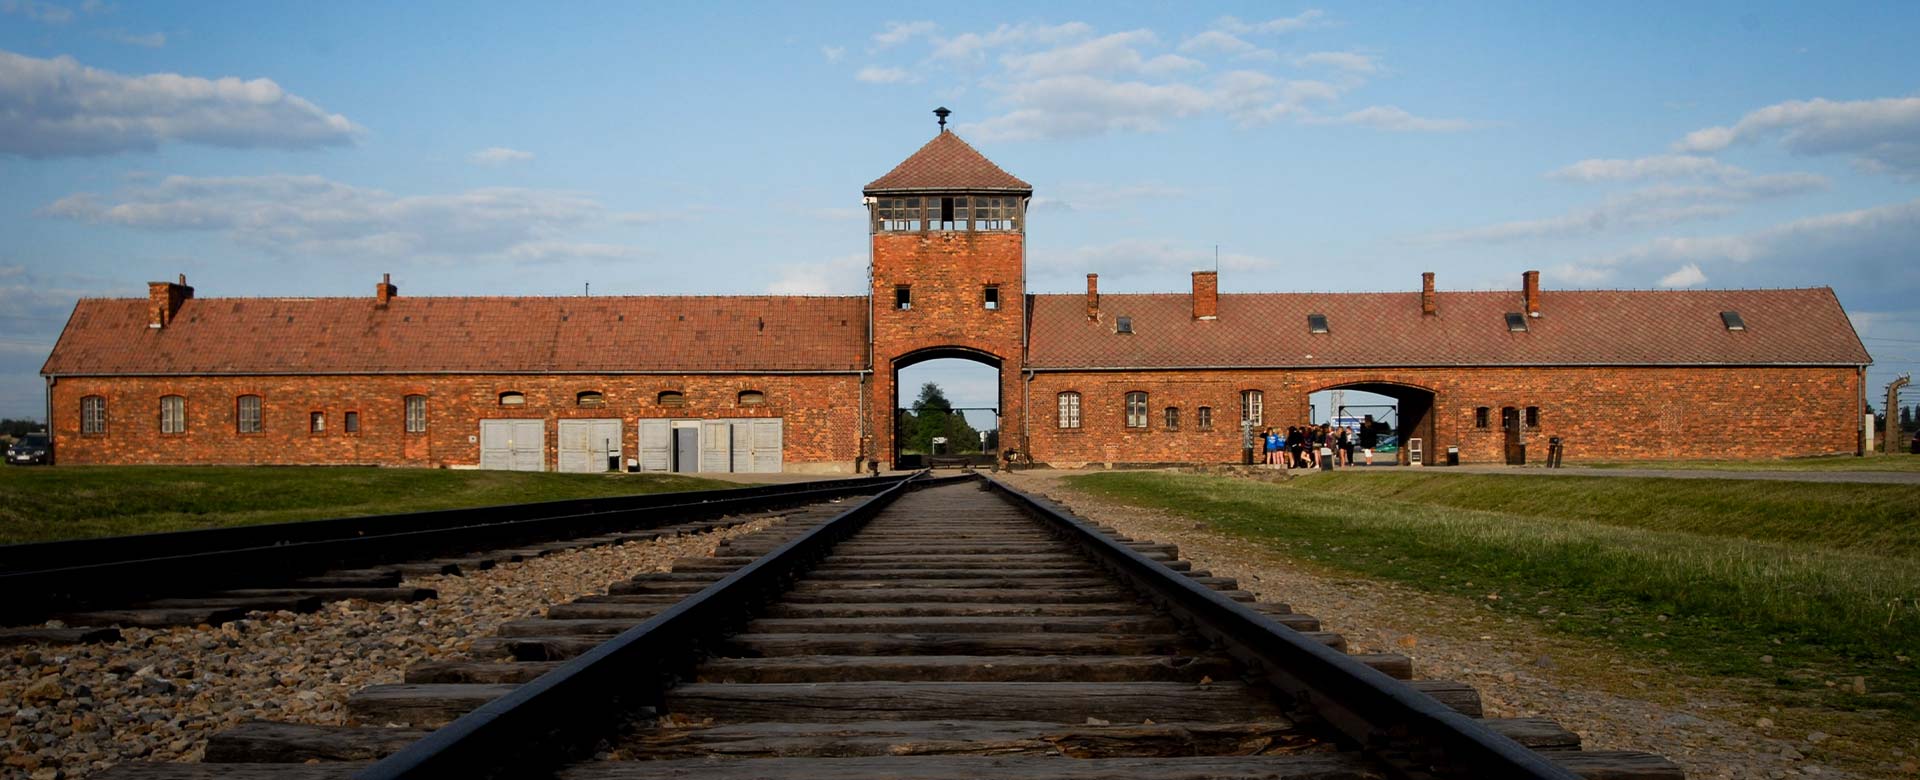 Auschwitz (2012) ©SIMON DAVAL/MAXPPP/LaPresse